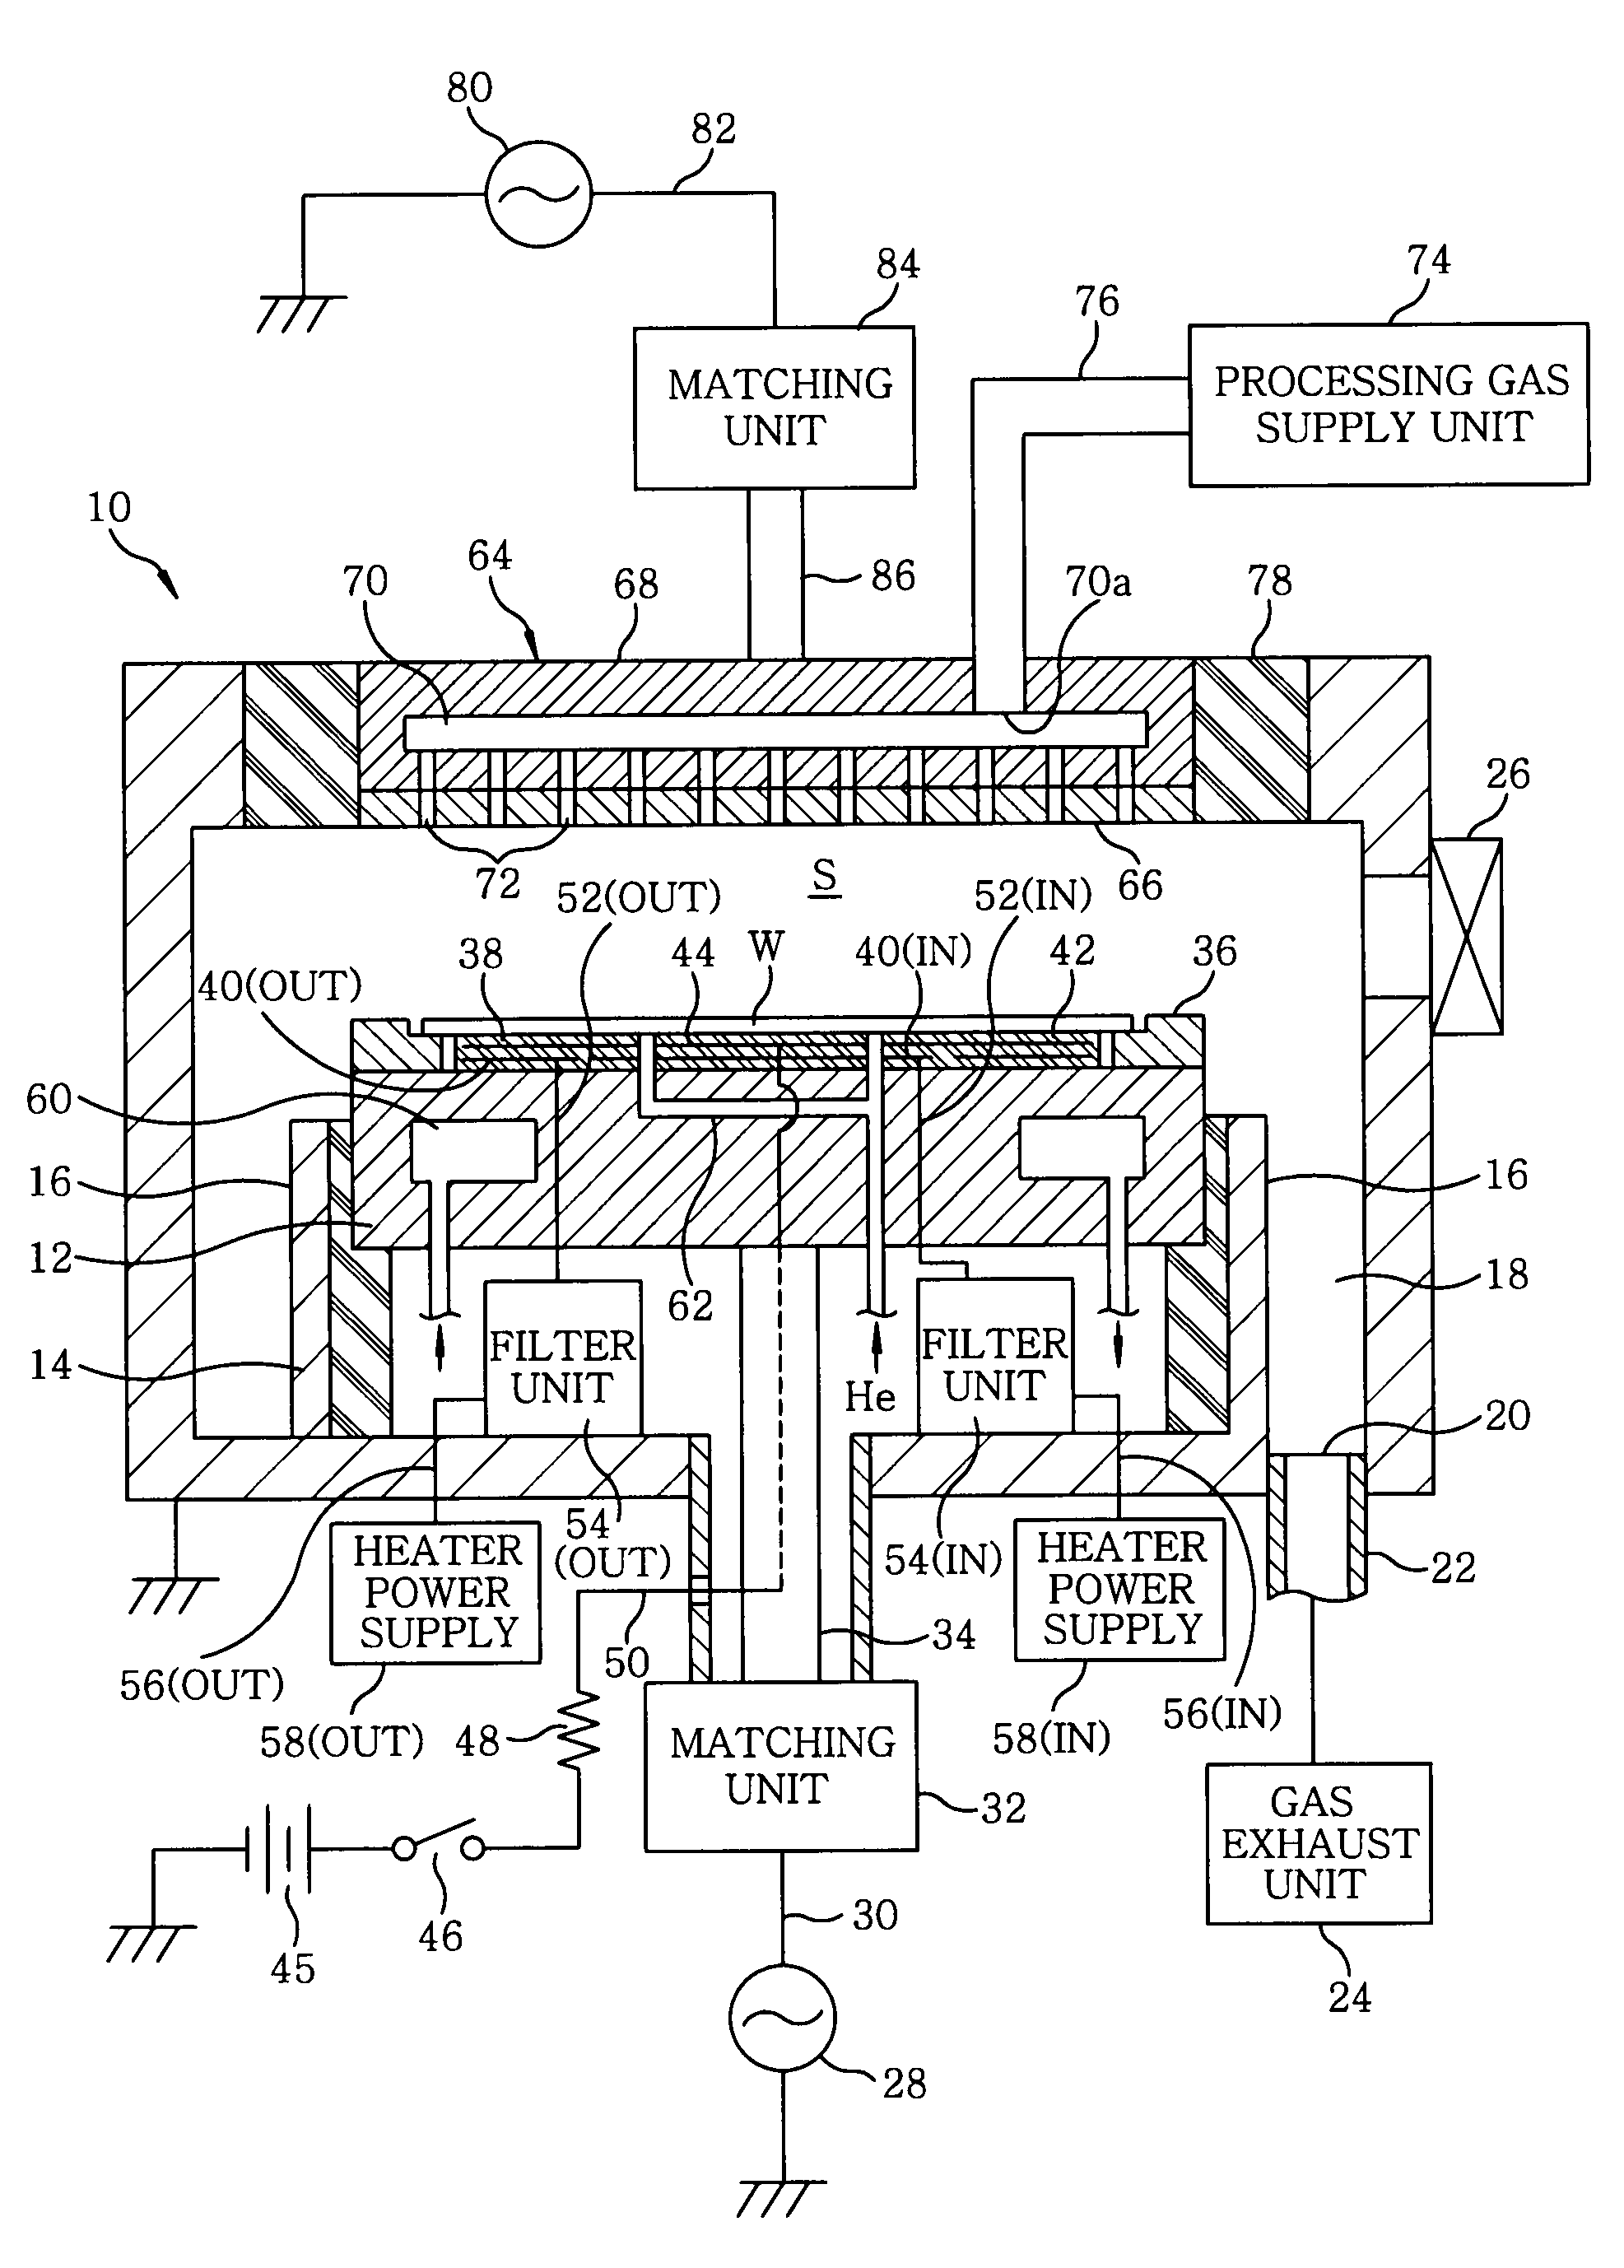 Plasma processing apparatus with filter circuit